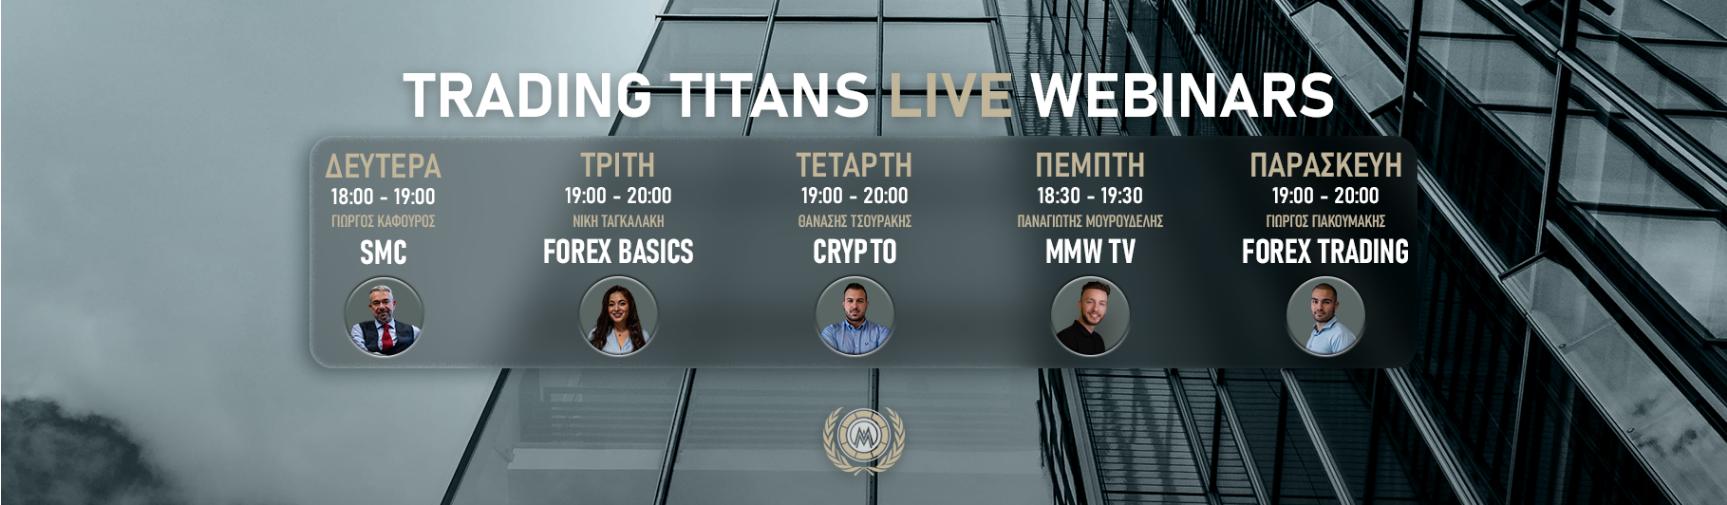 MMW Trading Titans